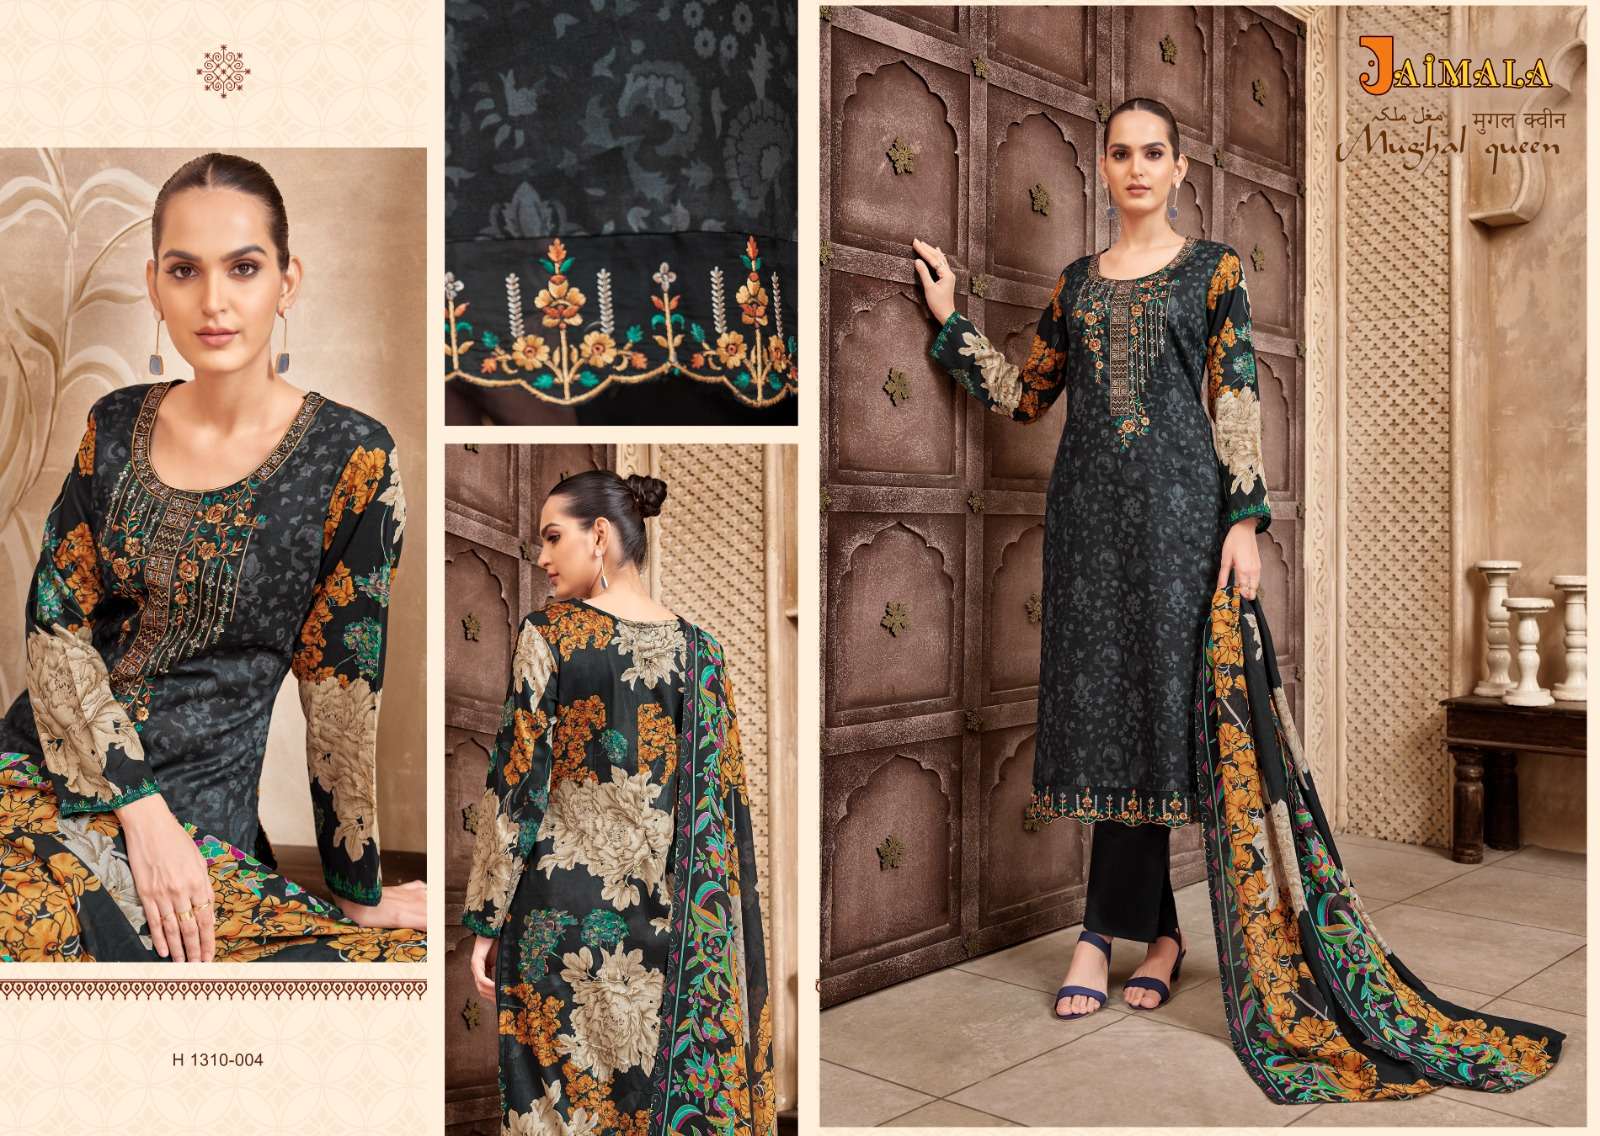 jaimala mughal queen stylish designer pakistani salwar suits catalogue collection surat 